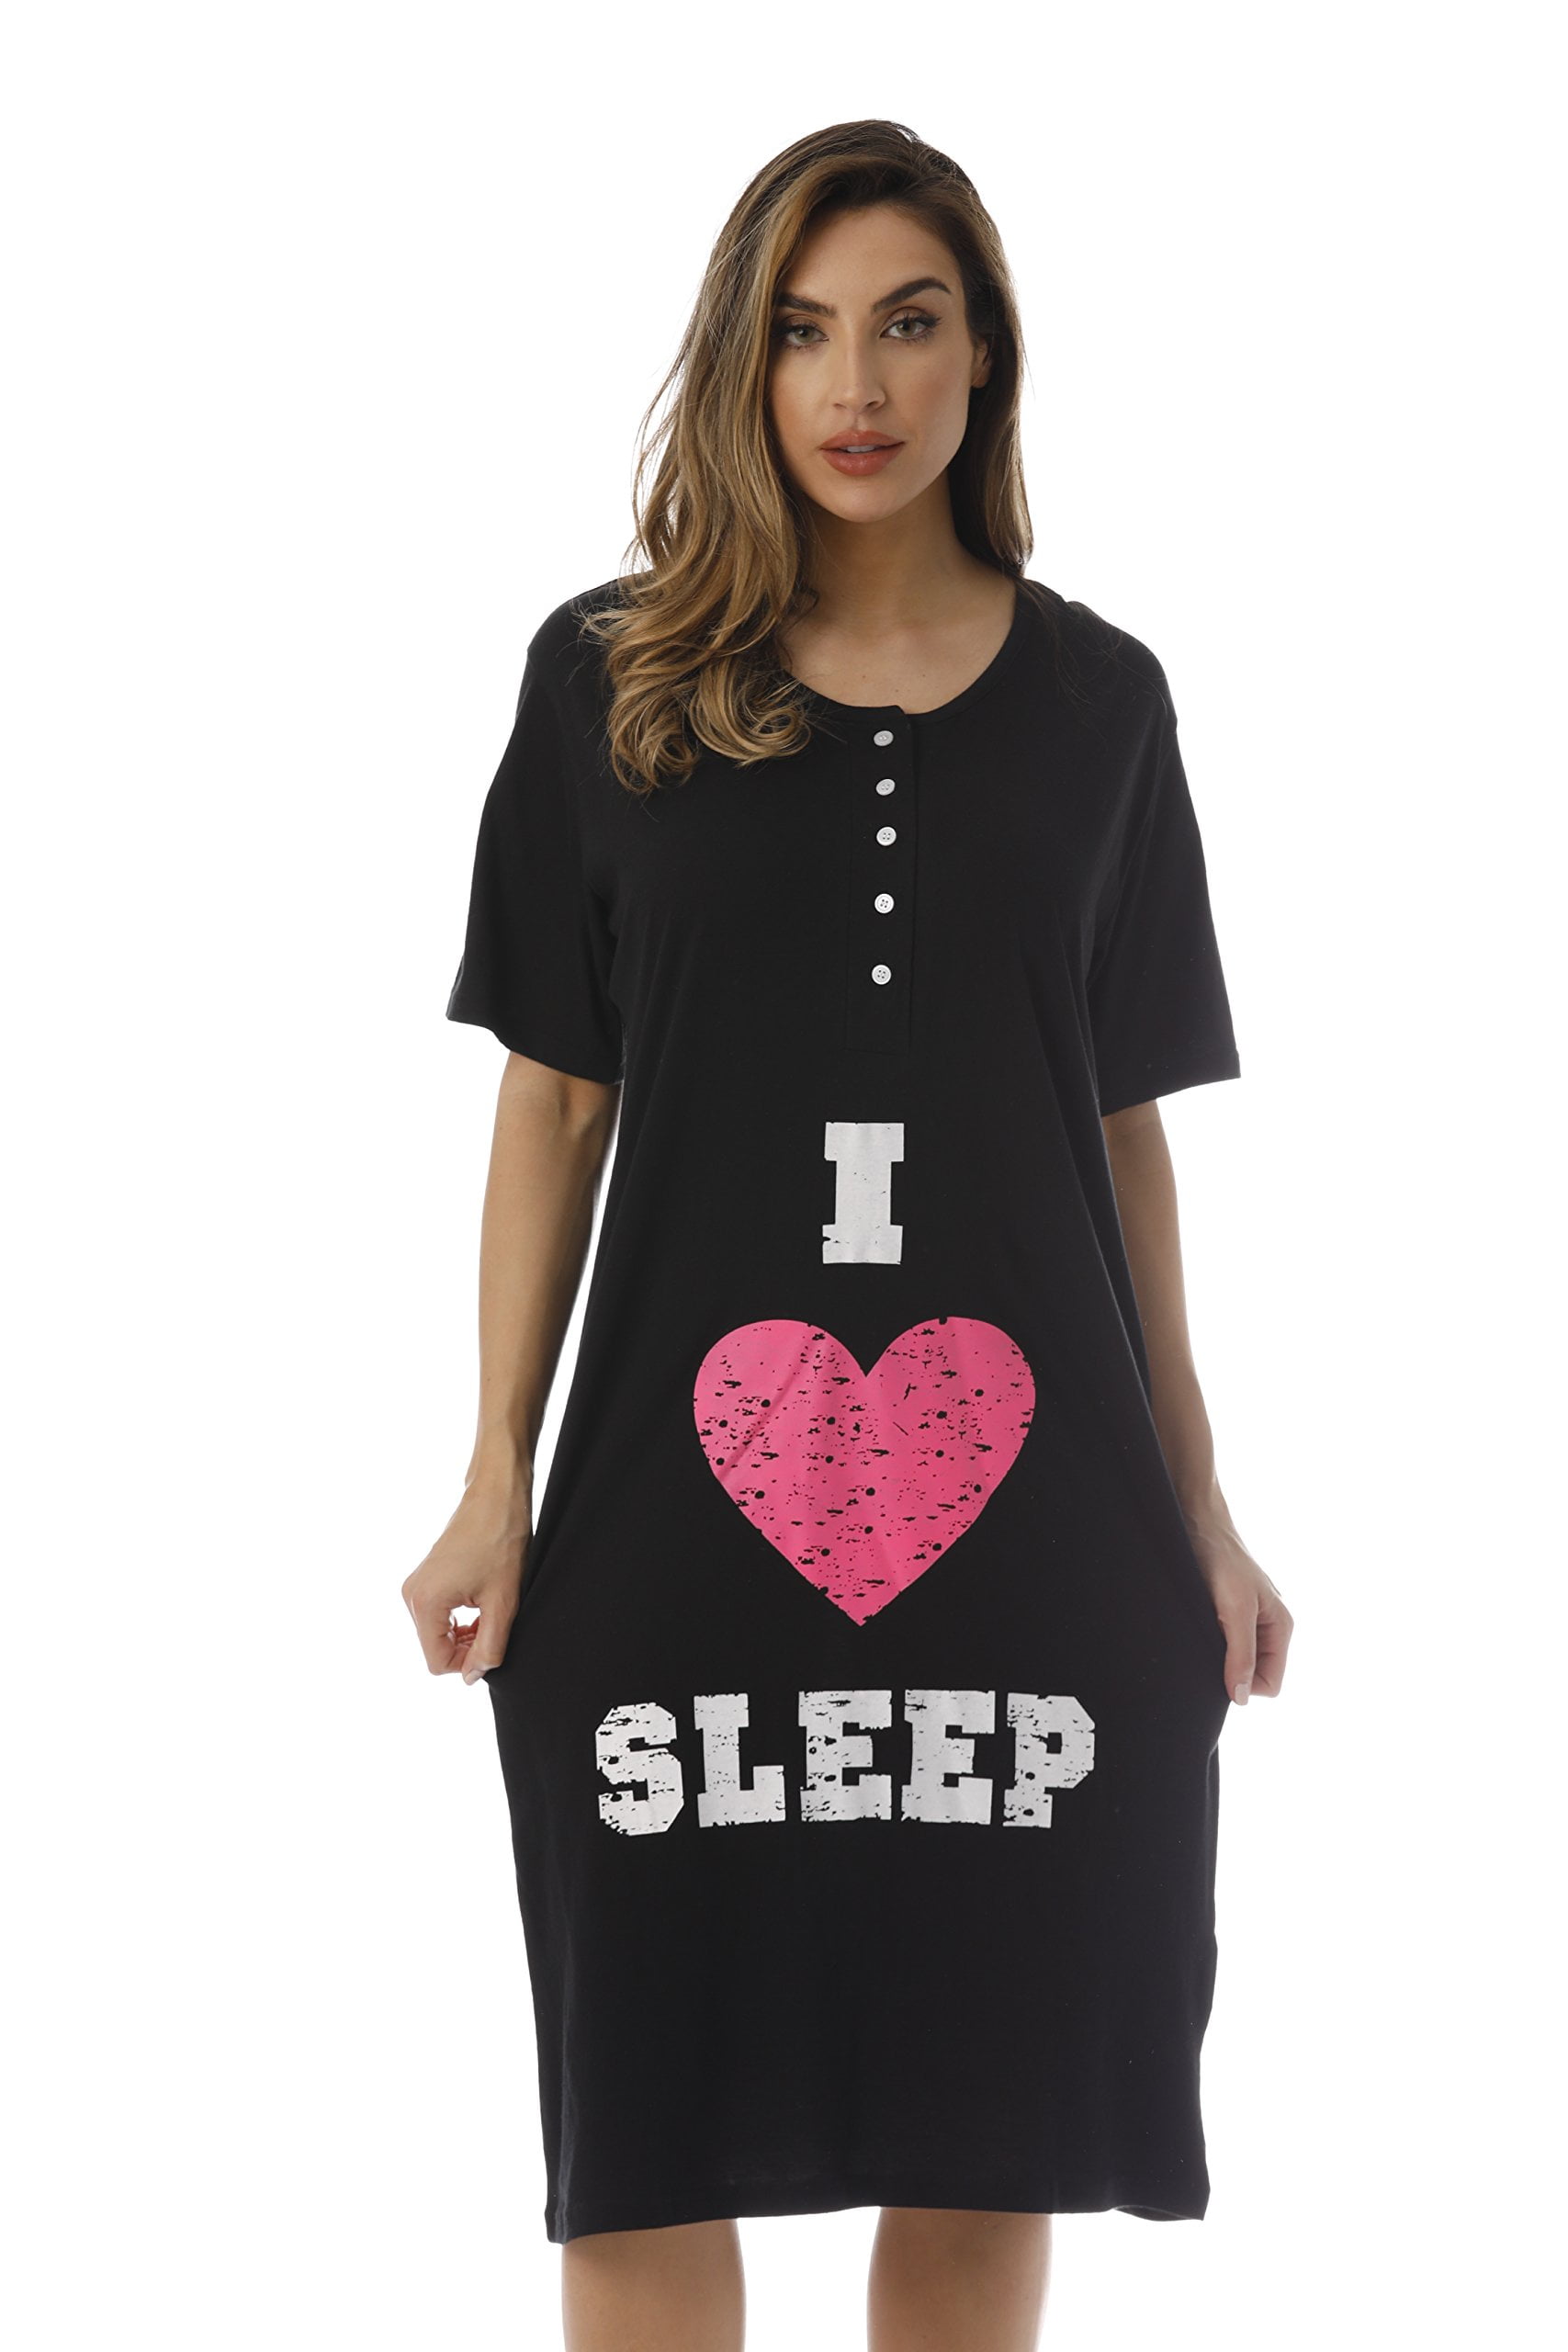 Just Love Short Sleeve Nightgown Sleepwear for Women (Black - I Heart  Sleep, 3X)